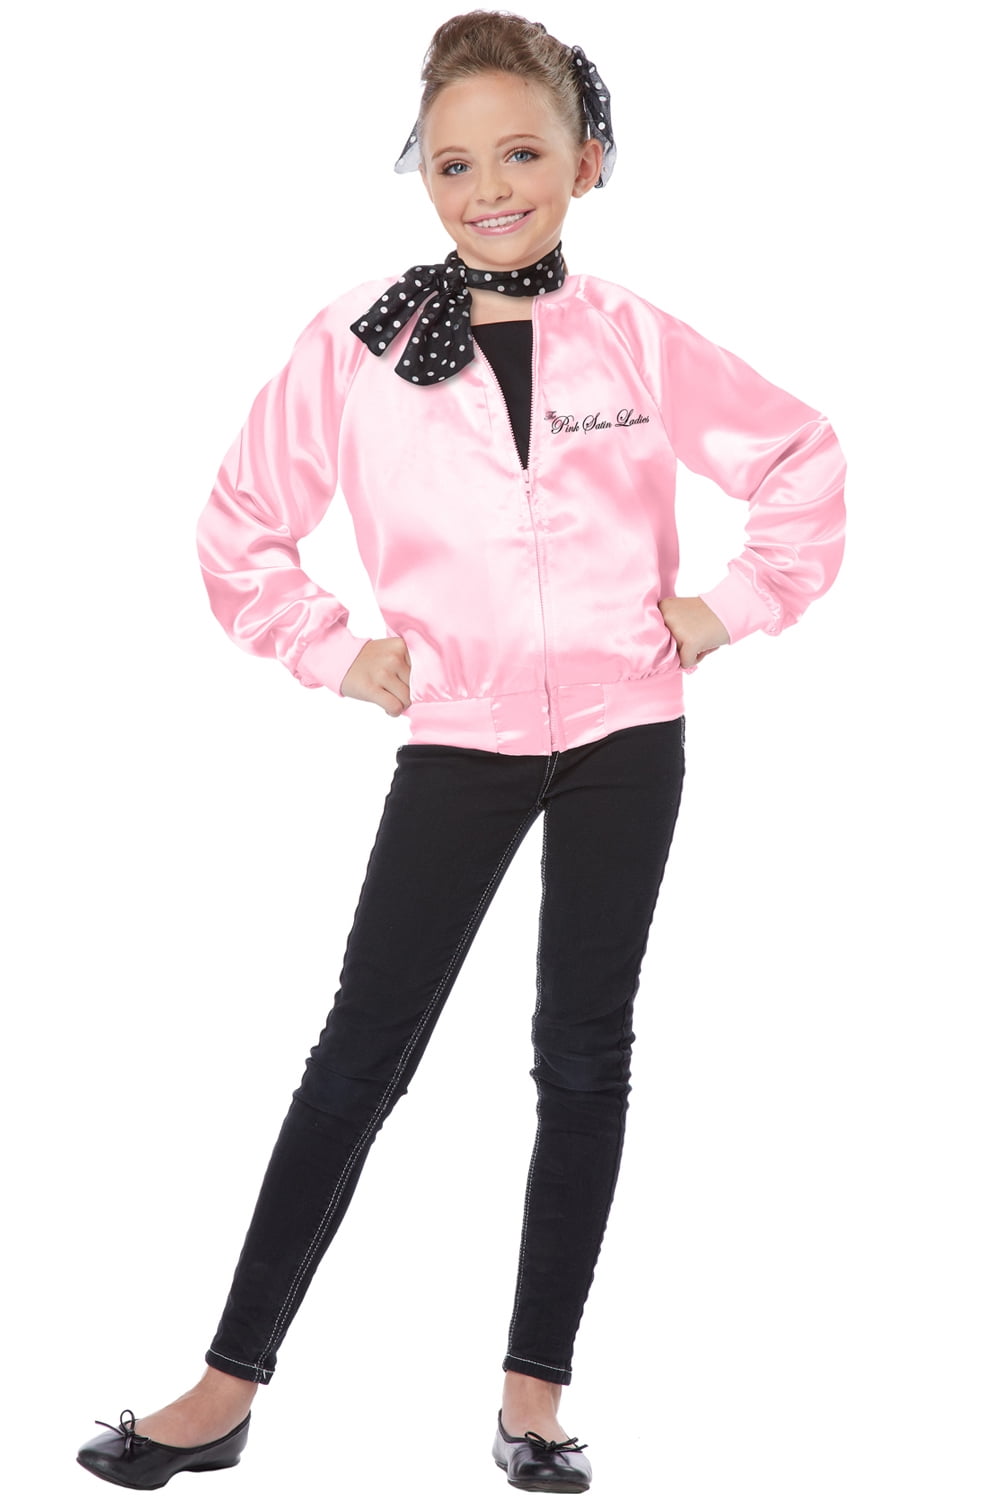 GIRLS CHILD Size Medium 8-10  Pink Satin Jacket HALLOWEEN COSTUME Grease Party